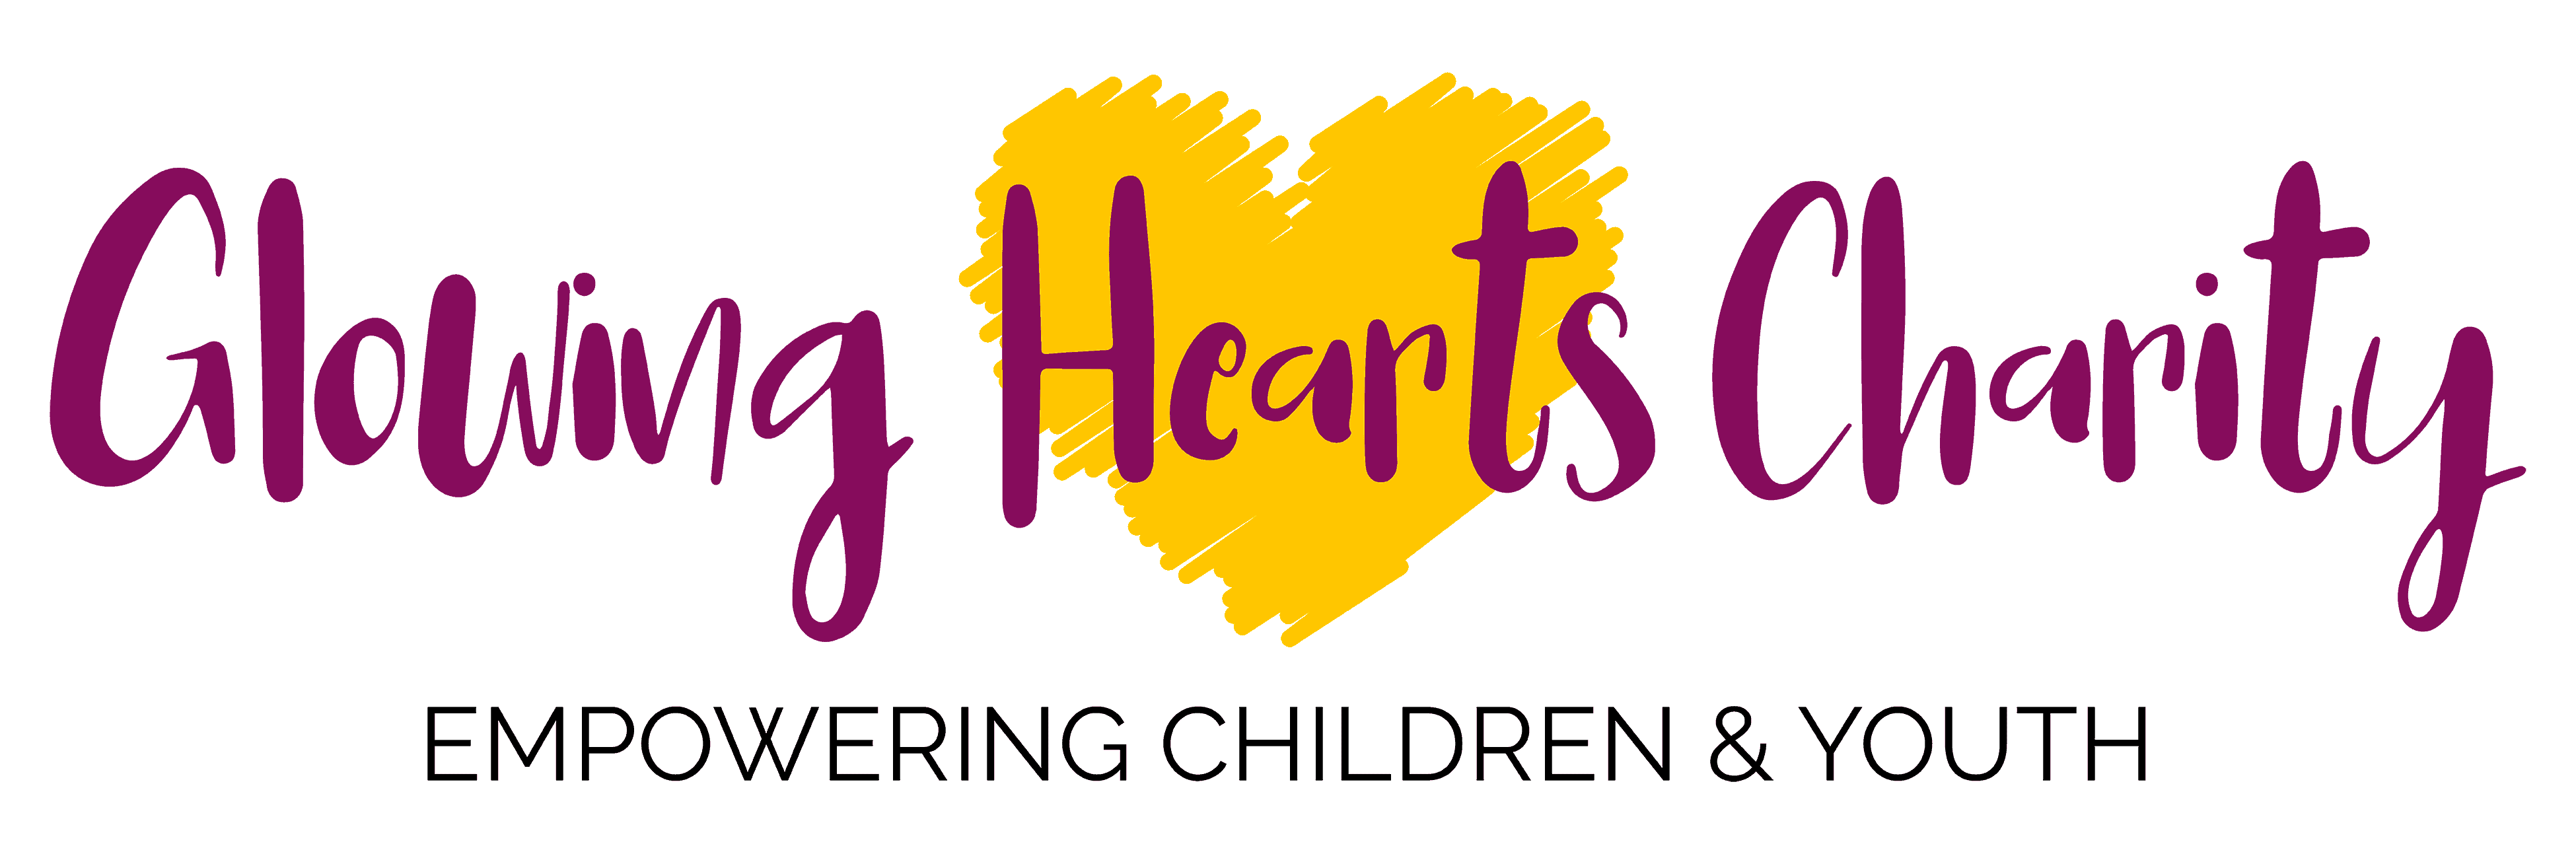 Glowing Hearts Charity